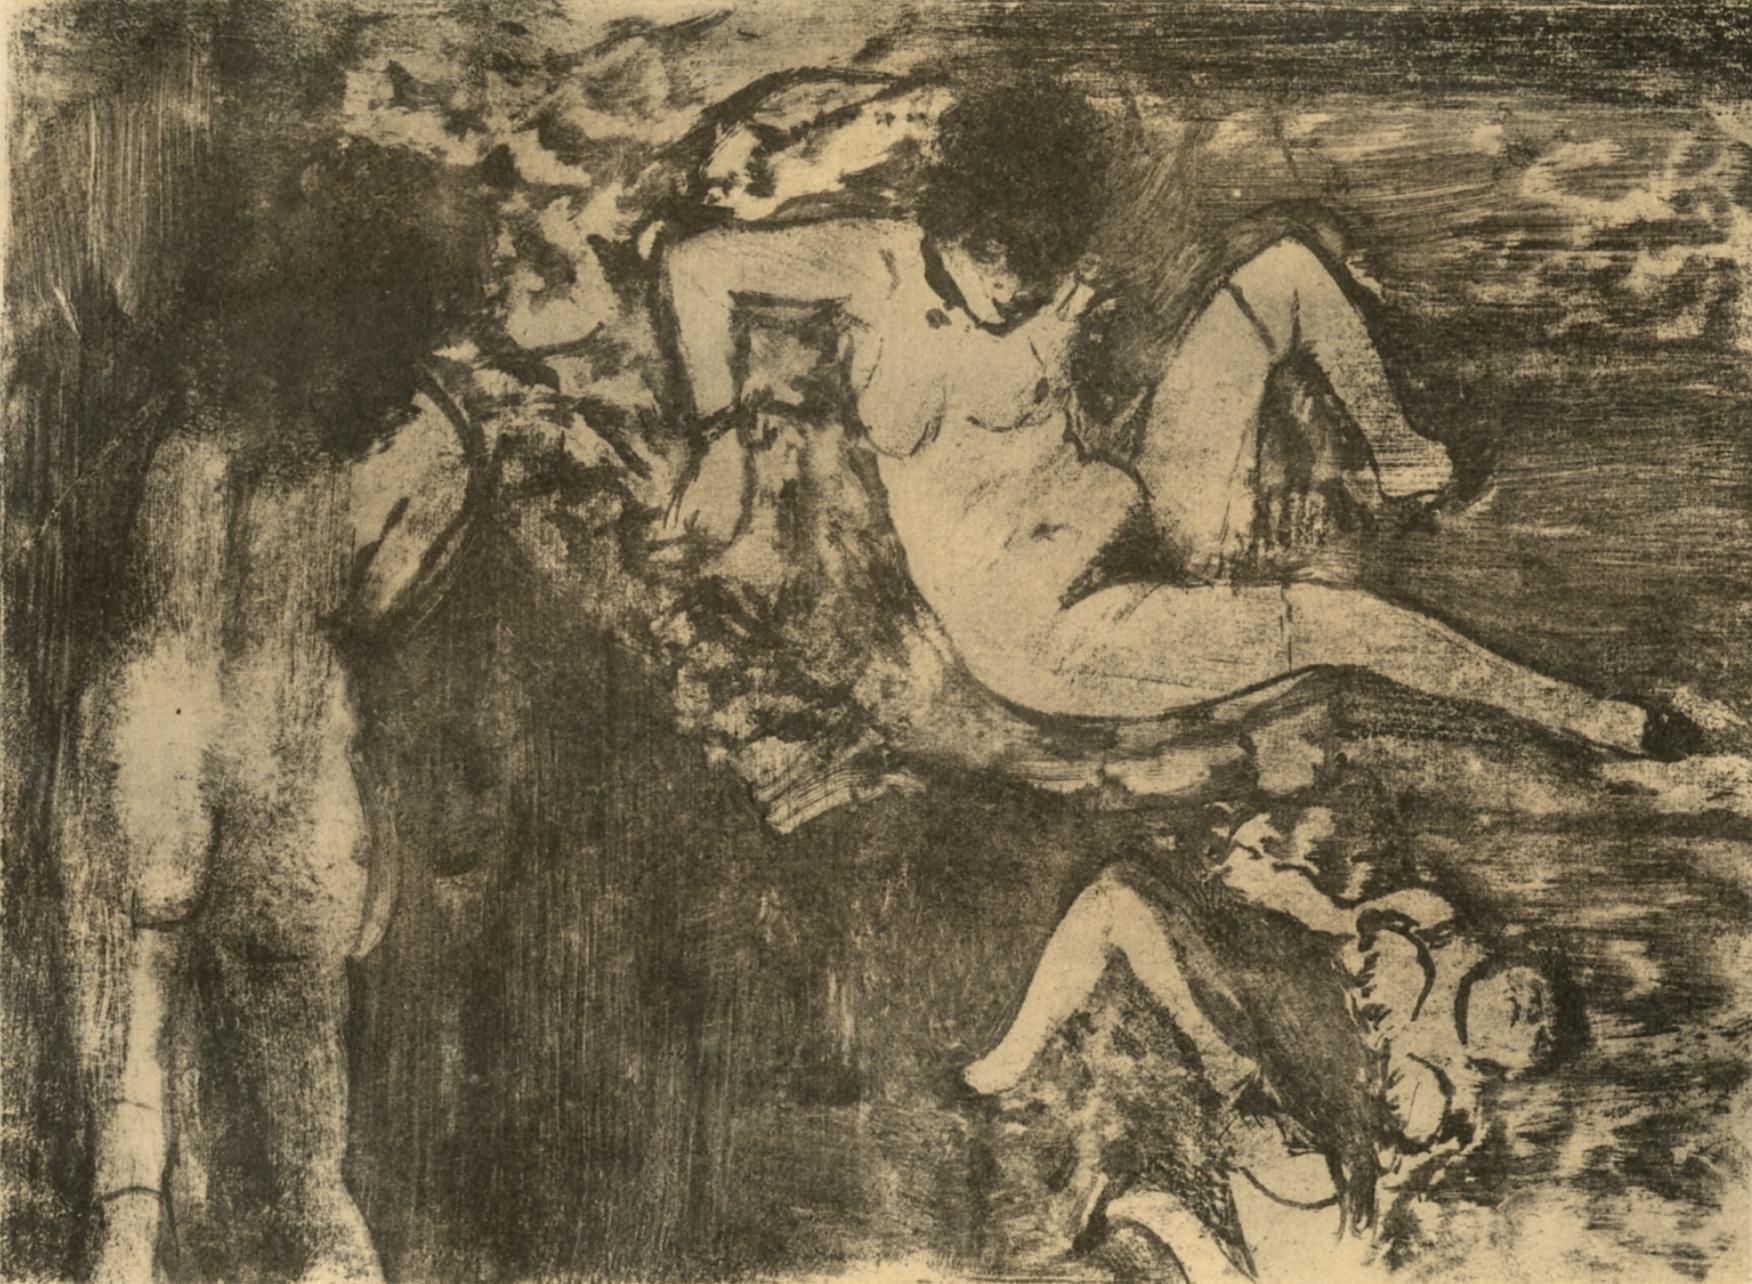 Edgar Degas Figurative Print - Degas, Les Femmes, Les Monotypes (after)